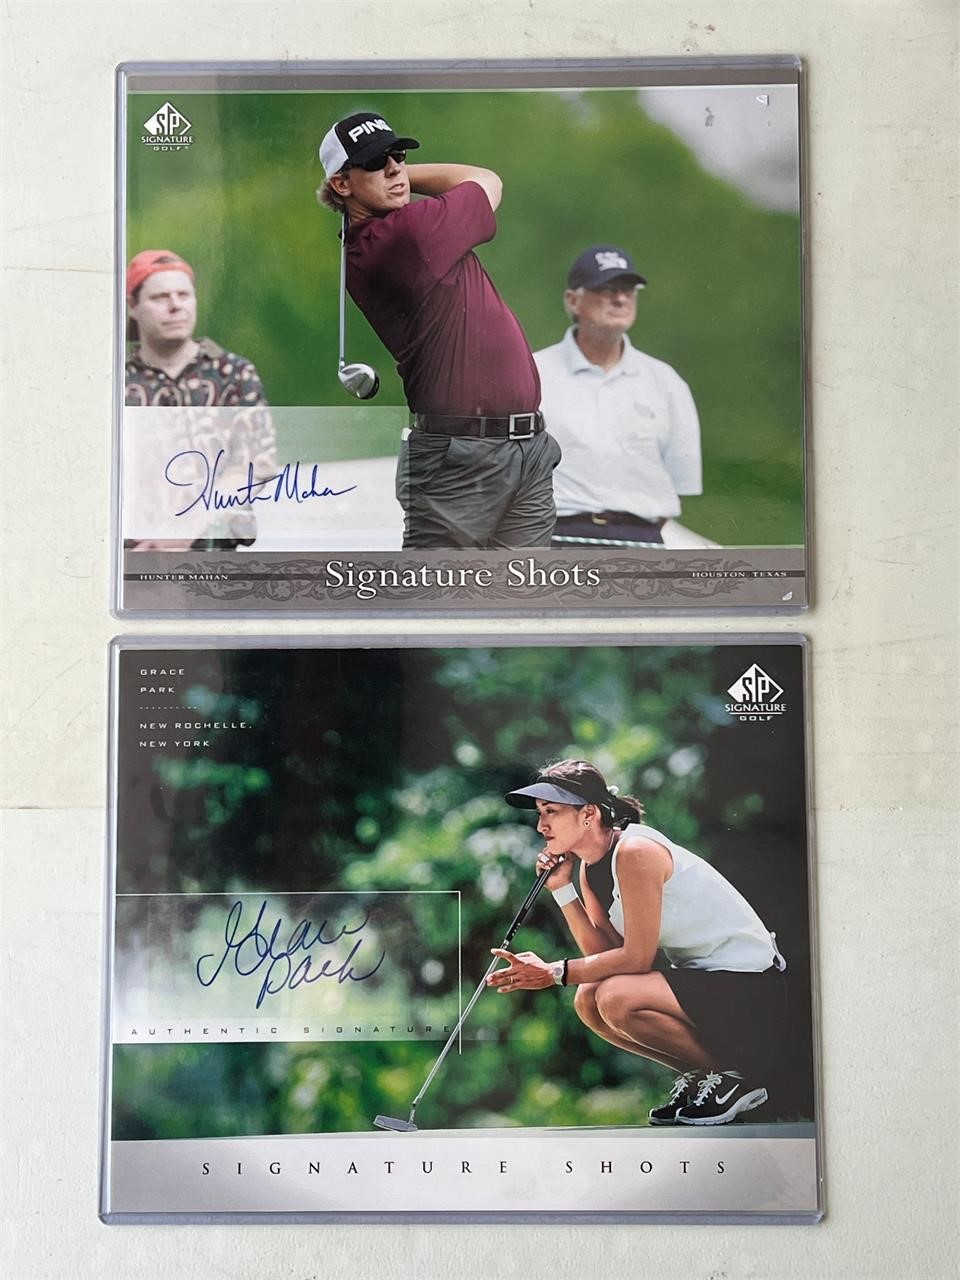 2 Autographed Golfer Photos